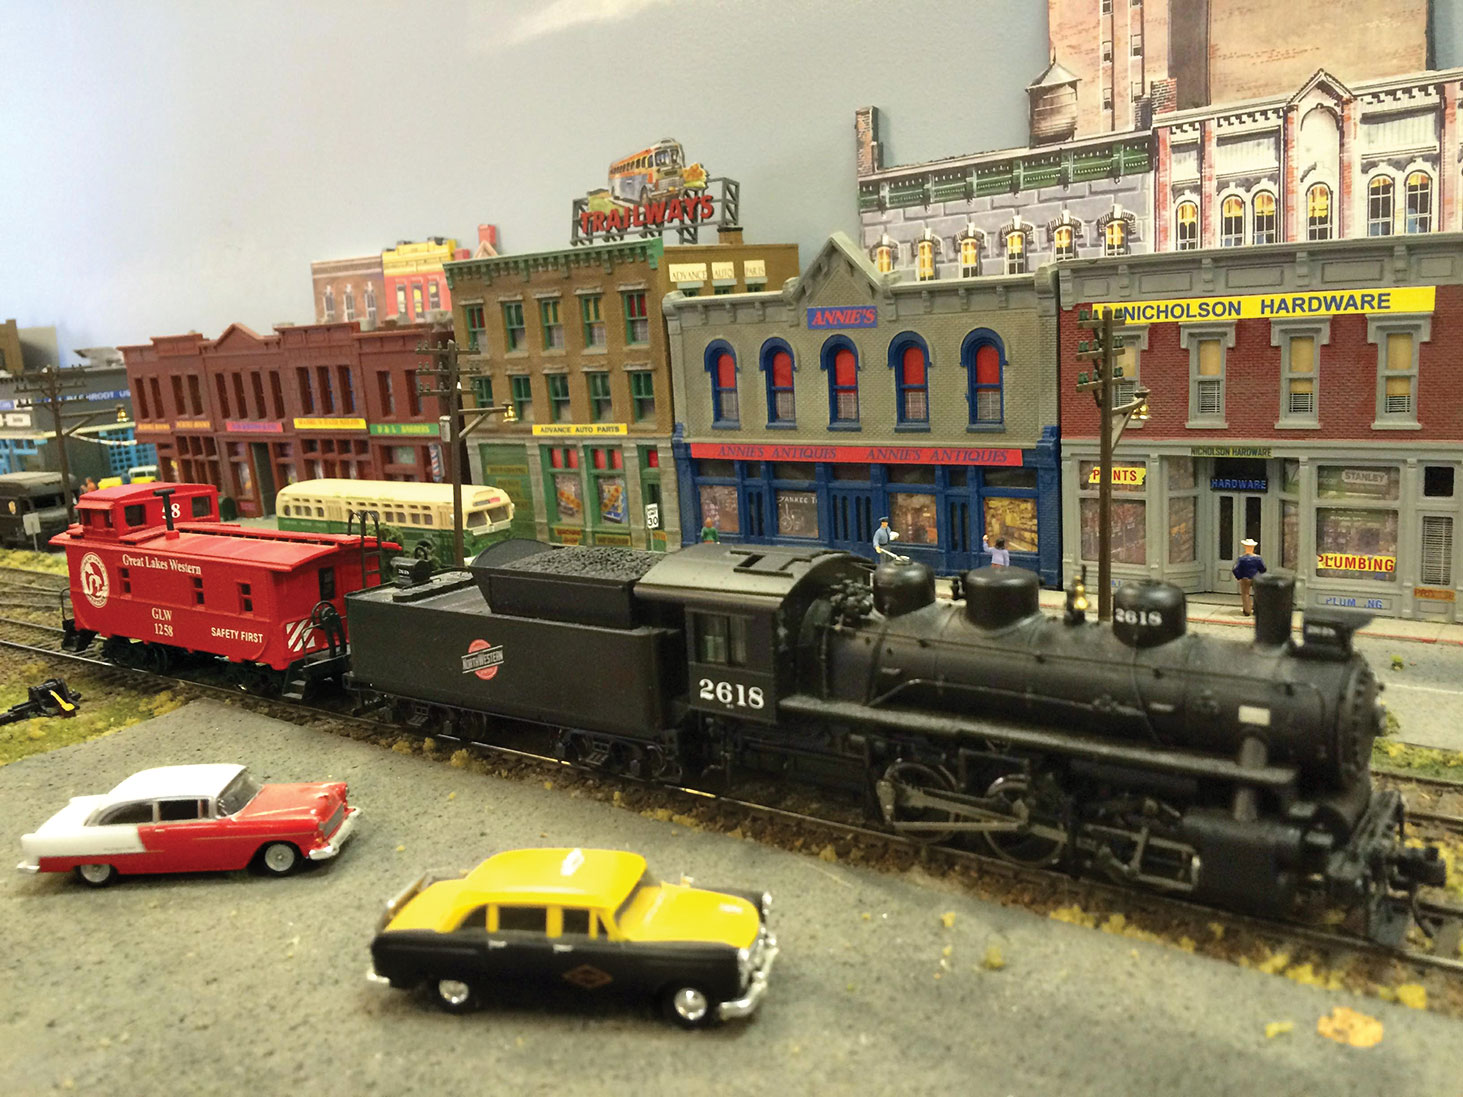 It’s the 1960s in Rockford, Illinois, at the PebbleCreek Model Railroad Club